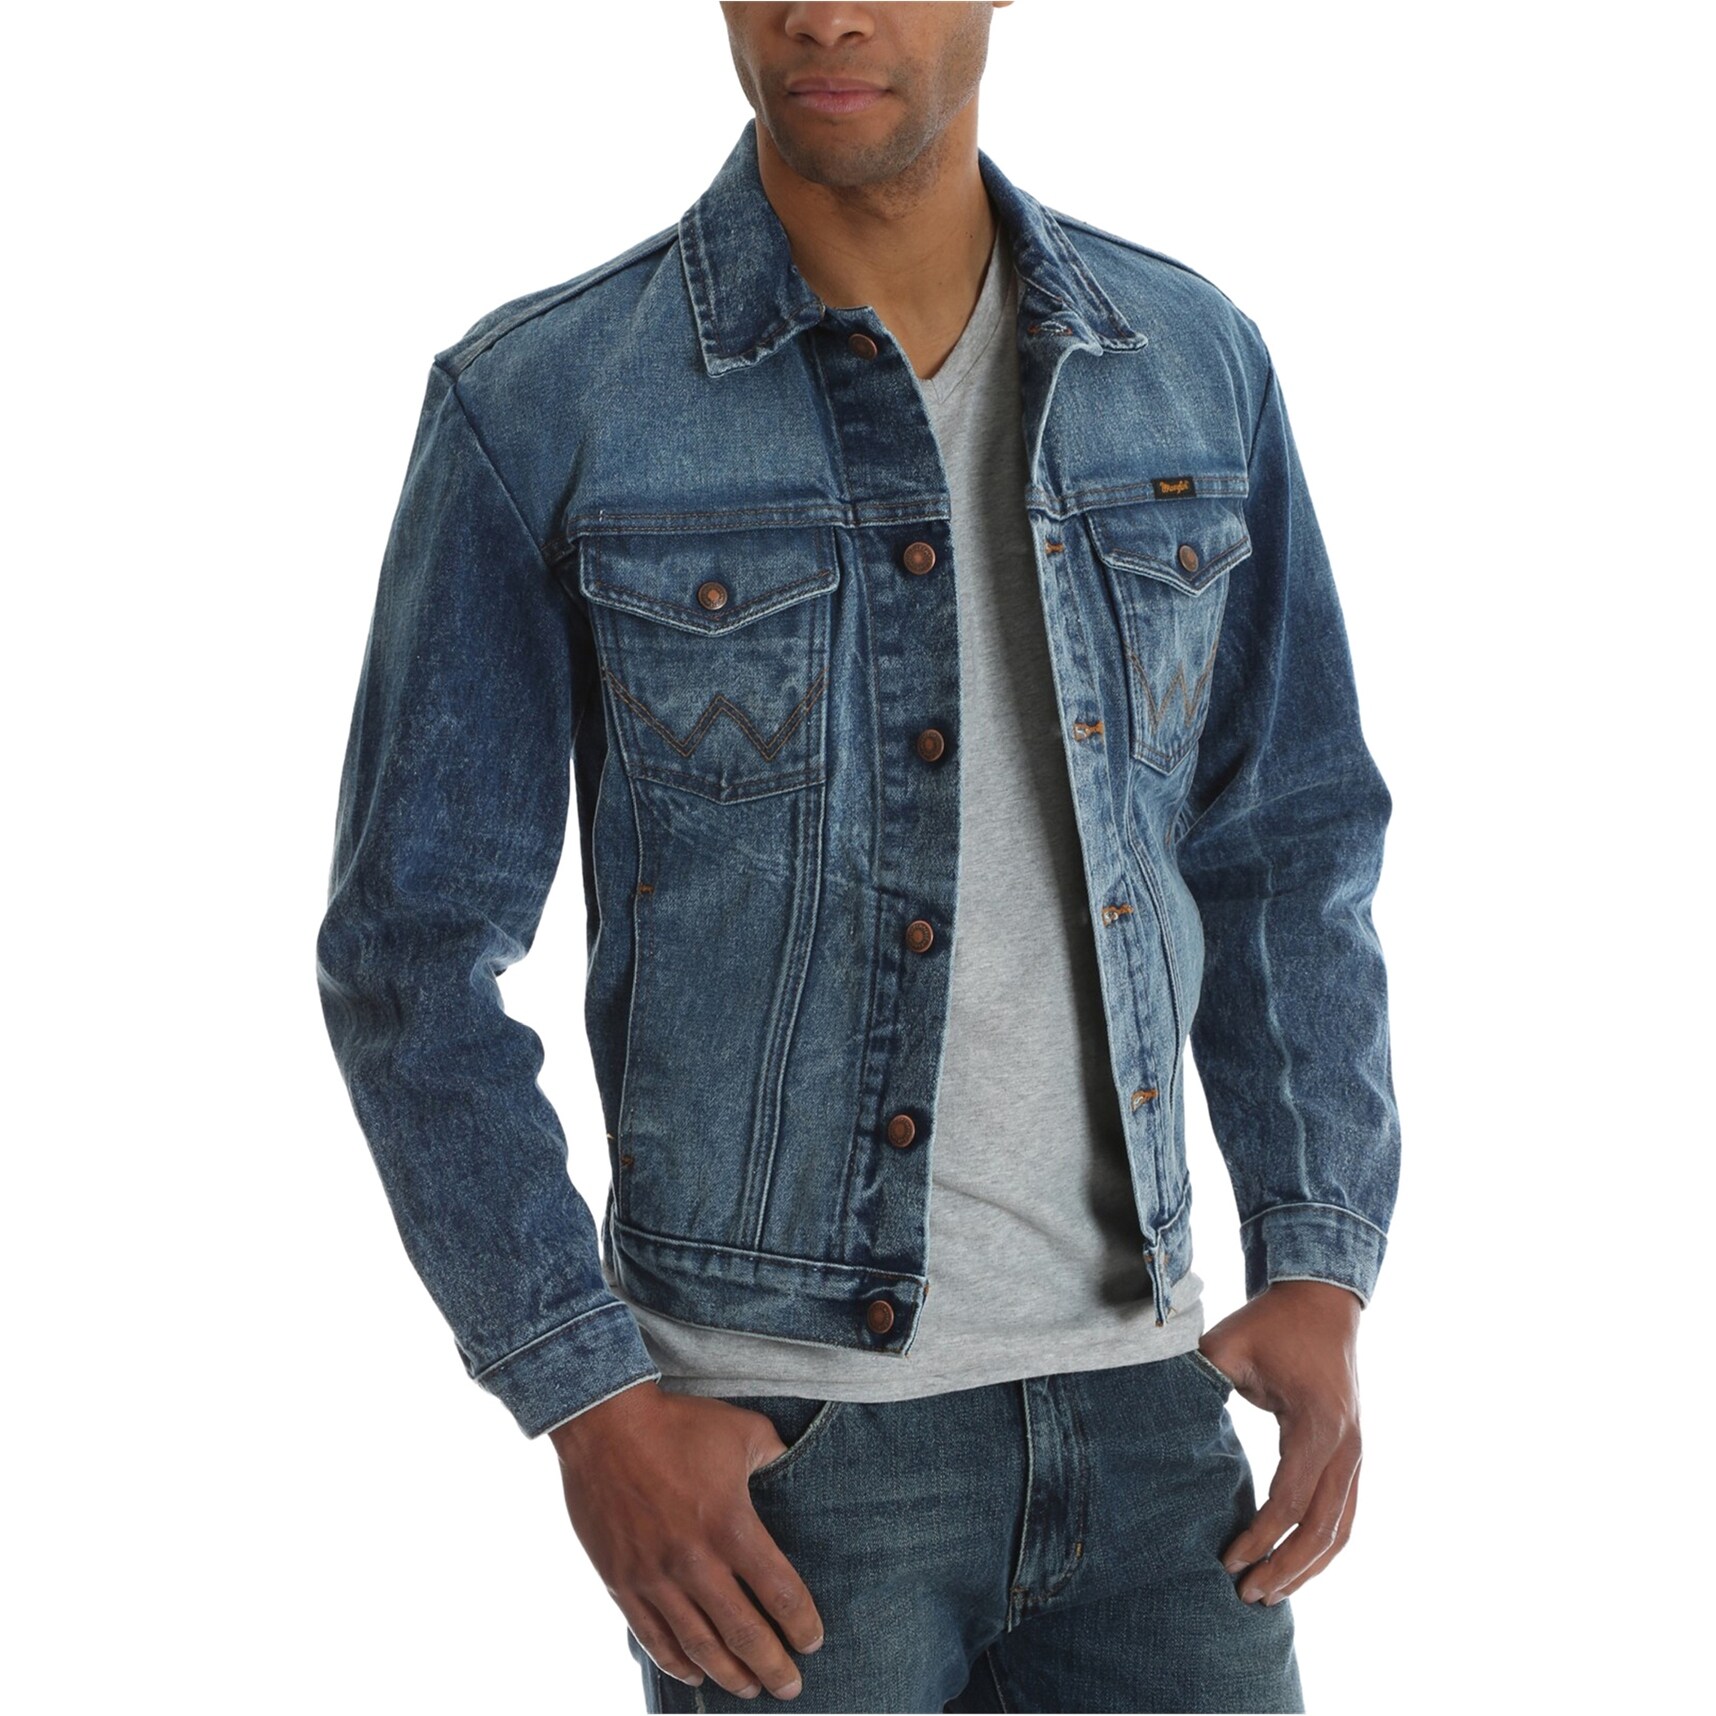 wrangler blue jean jacket